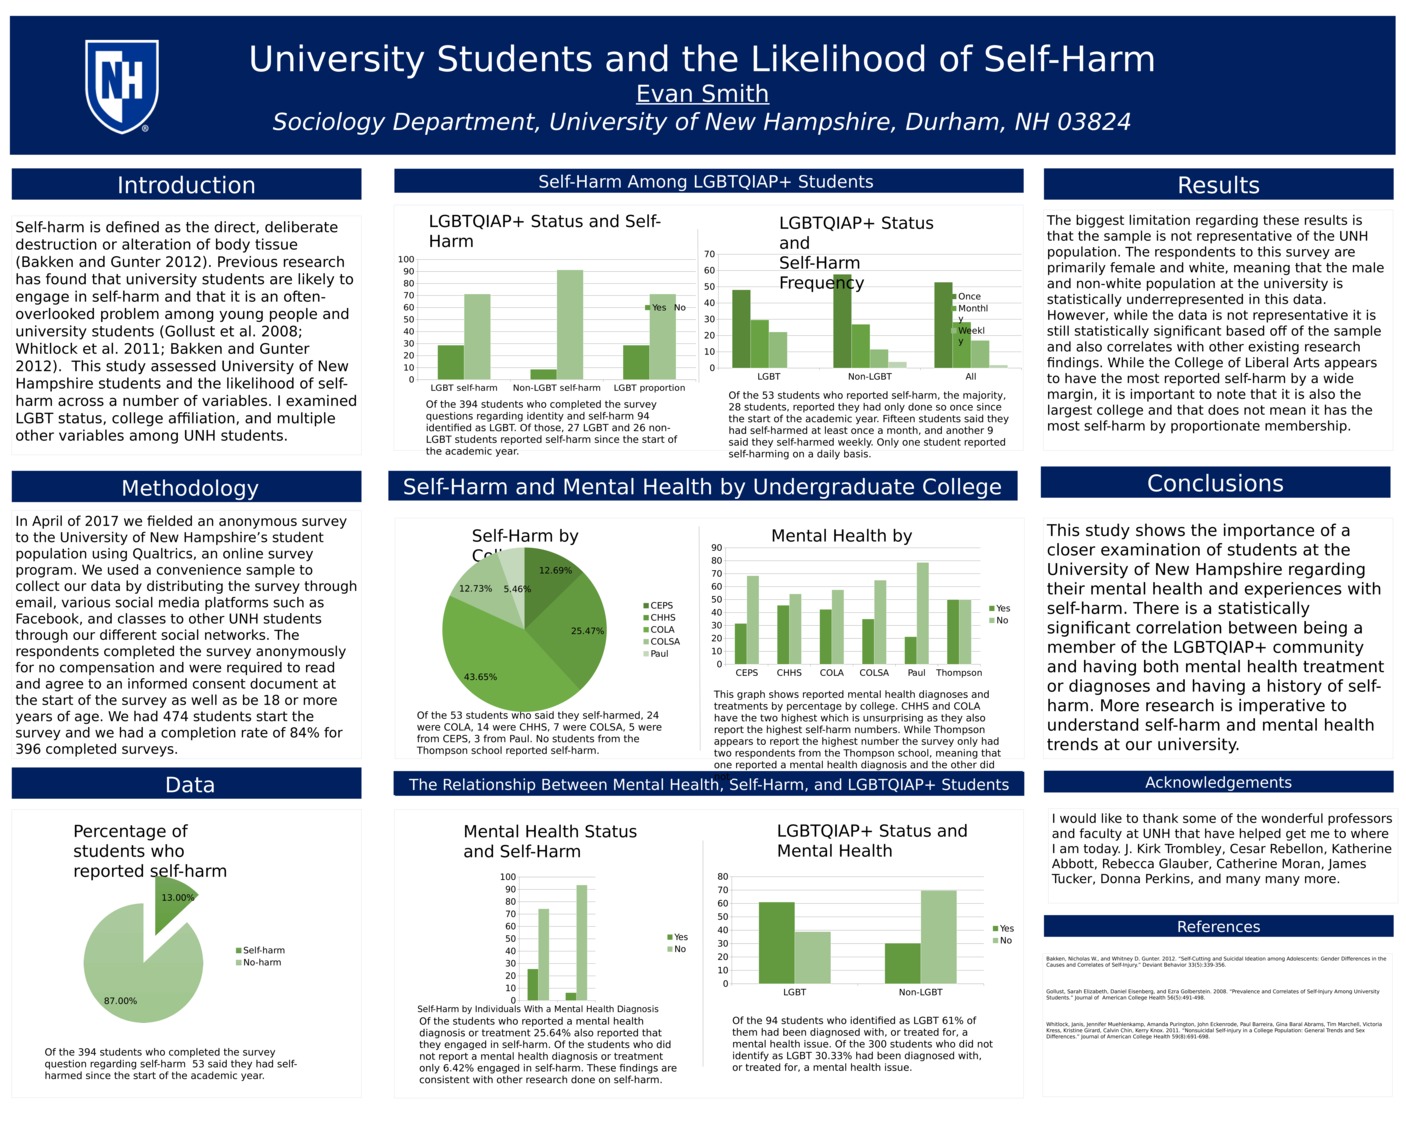 University Students And The Likelihood Of Self-Harm by ers1005